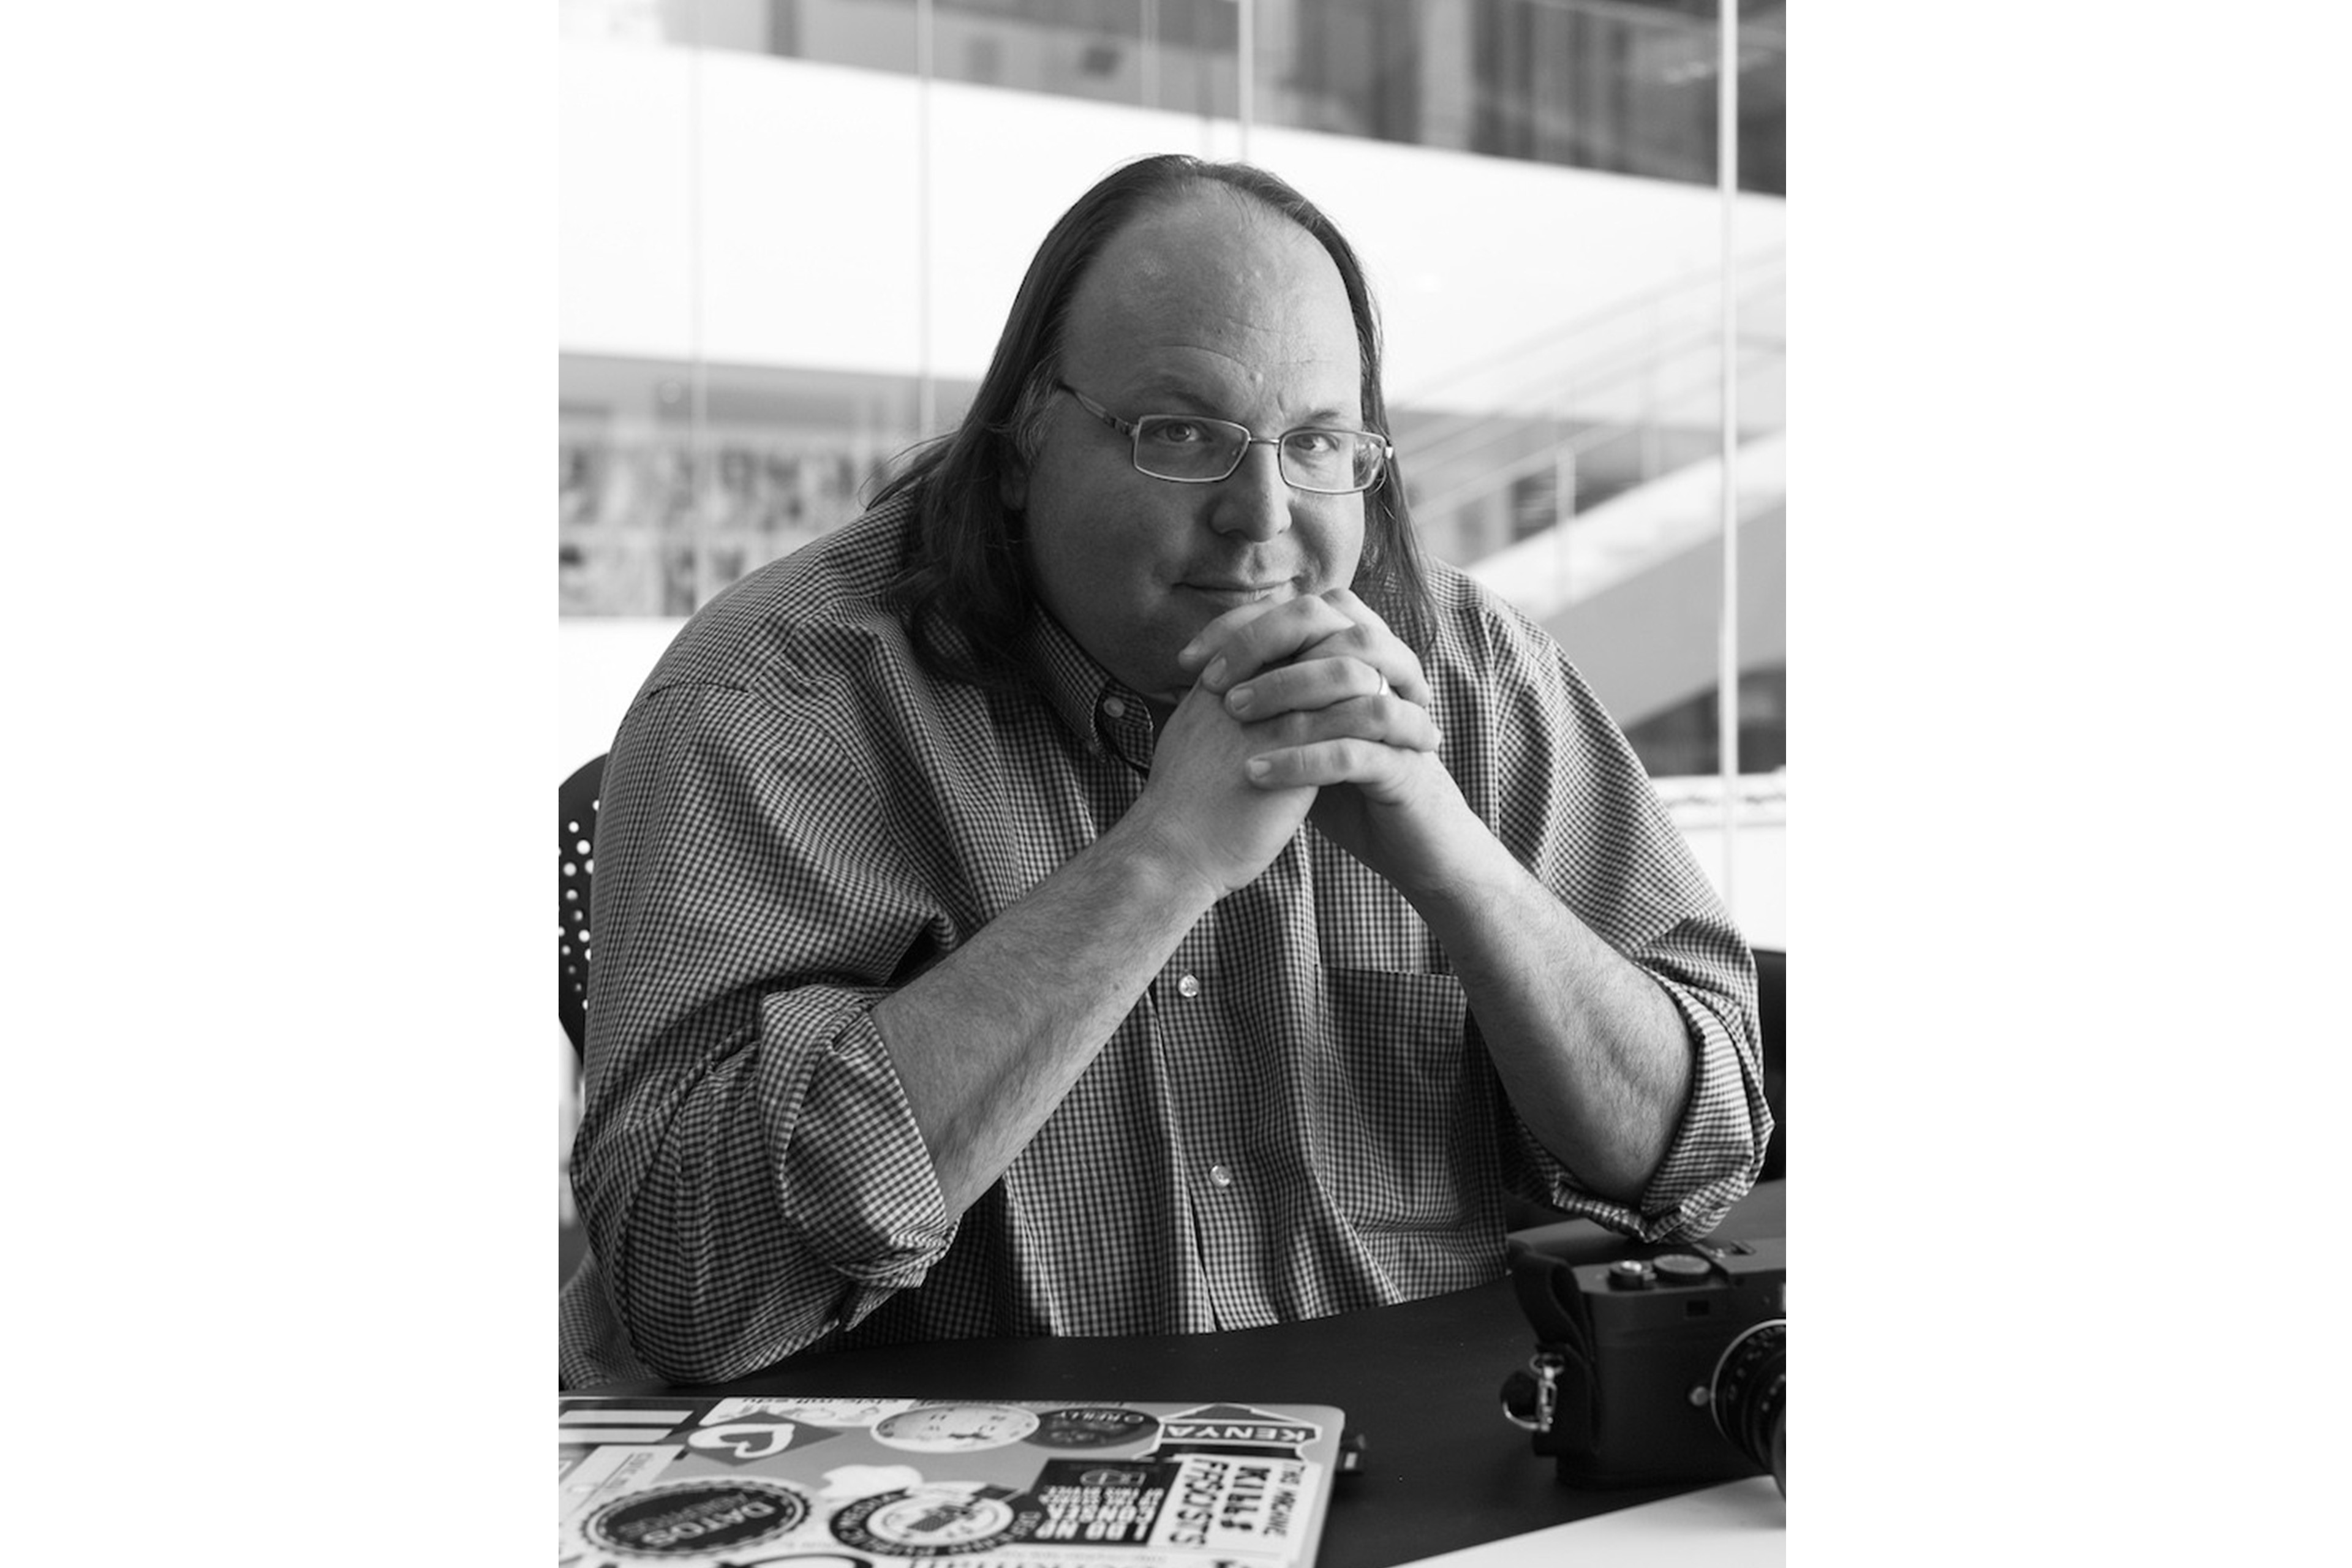 A photographic portrait of Ethan Zuckerman